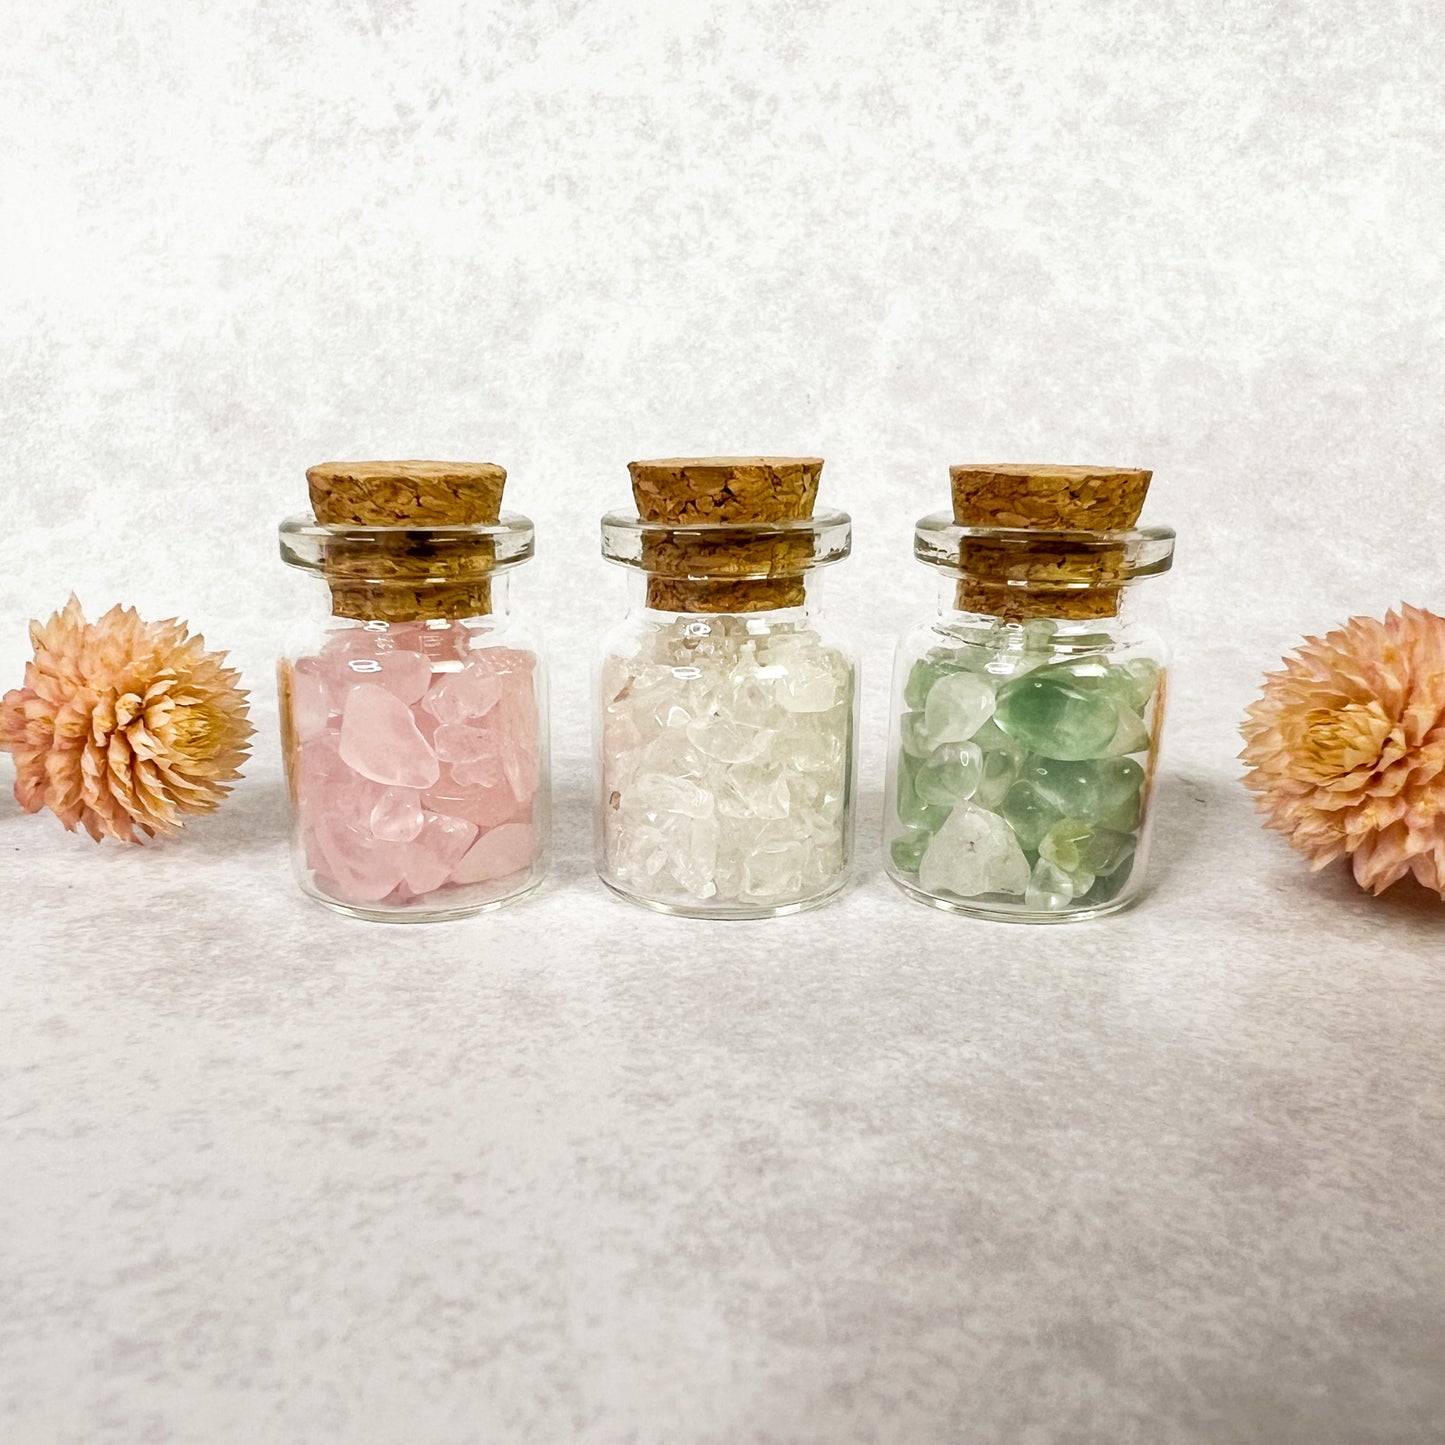 Spring Crystal Wish Jar Trio - Wishing Jars - Rose Quartz, Clear Quartz & Green Fluorite